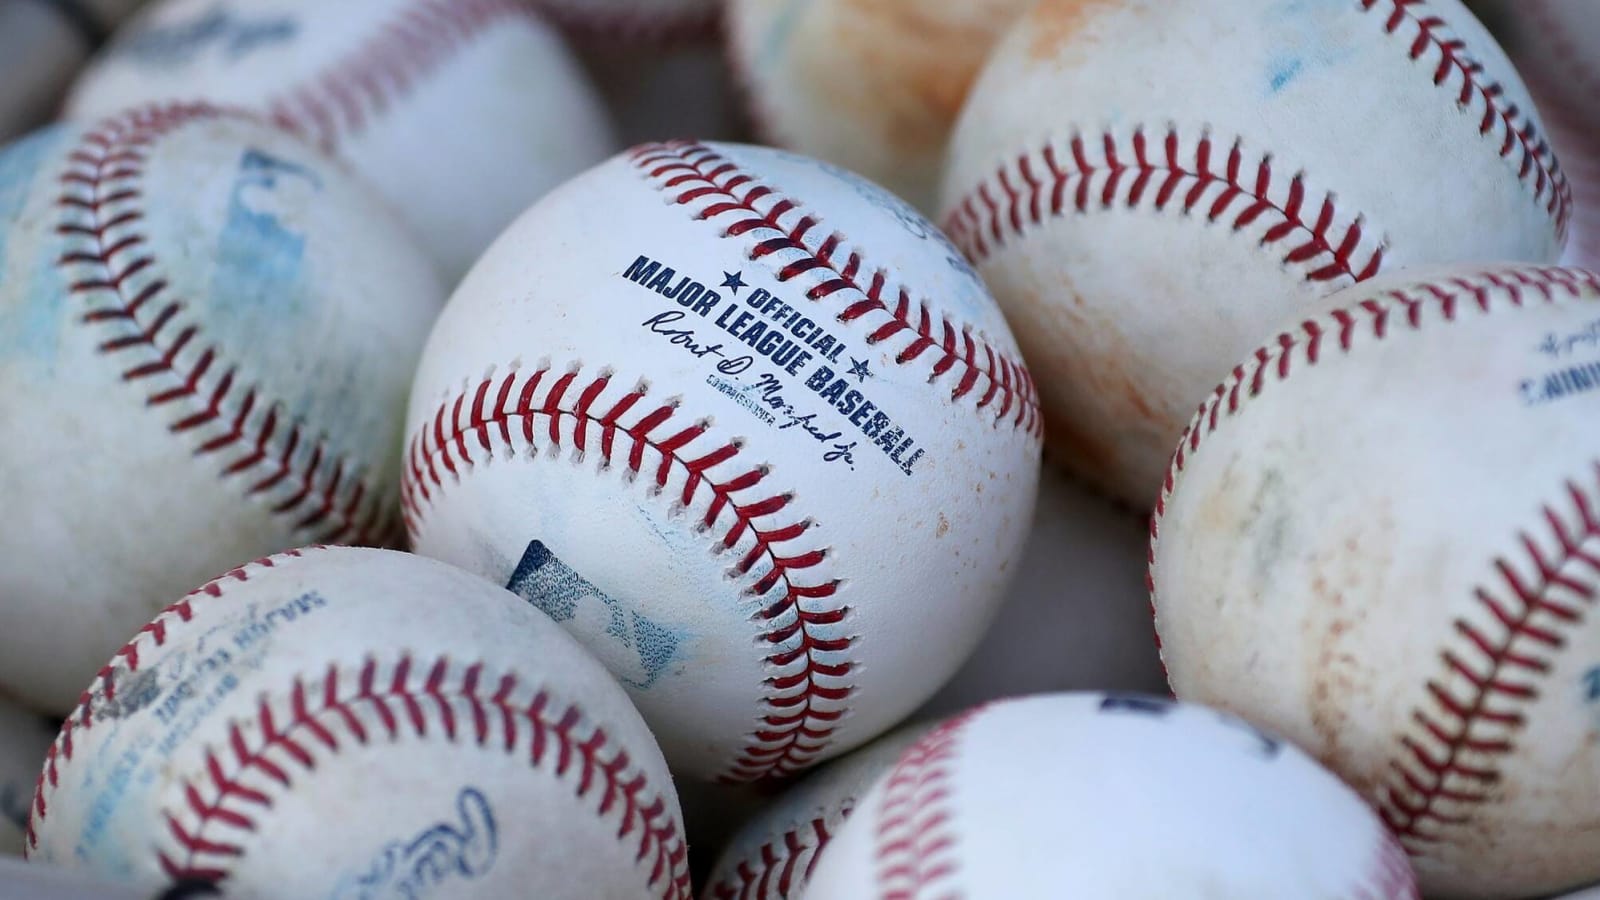 Is Major League Baseball coming to Orlando?